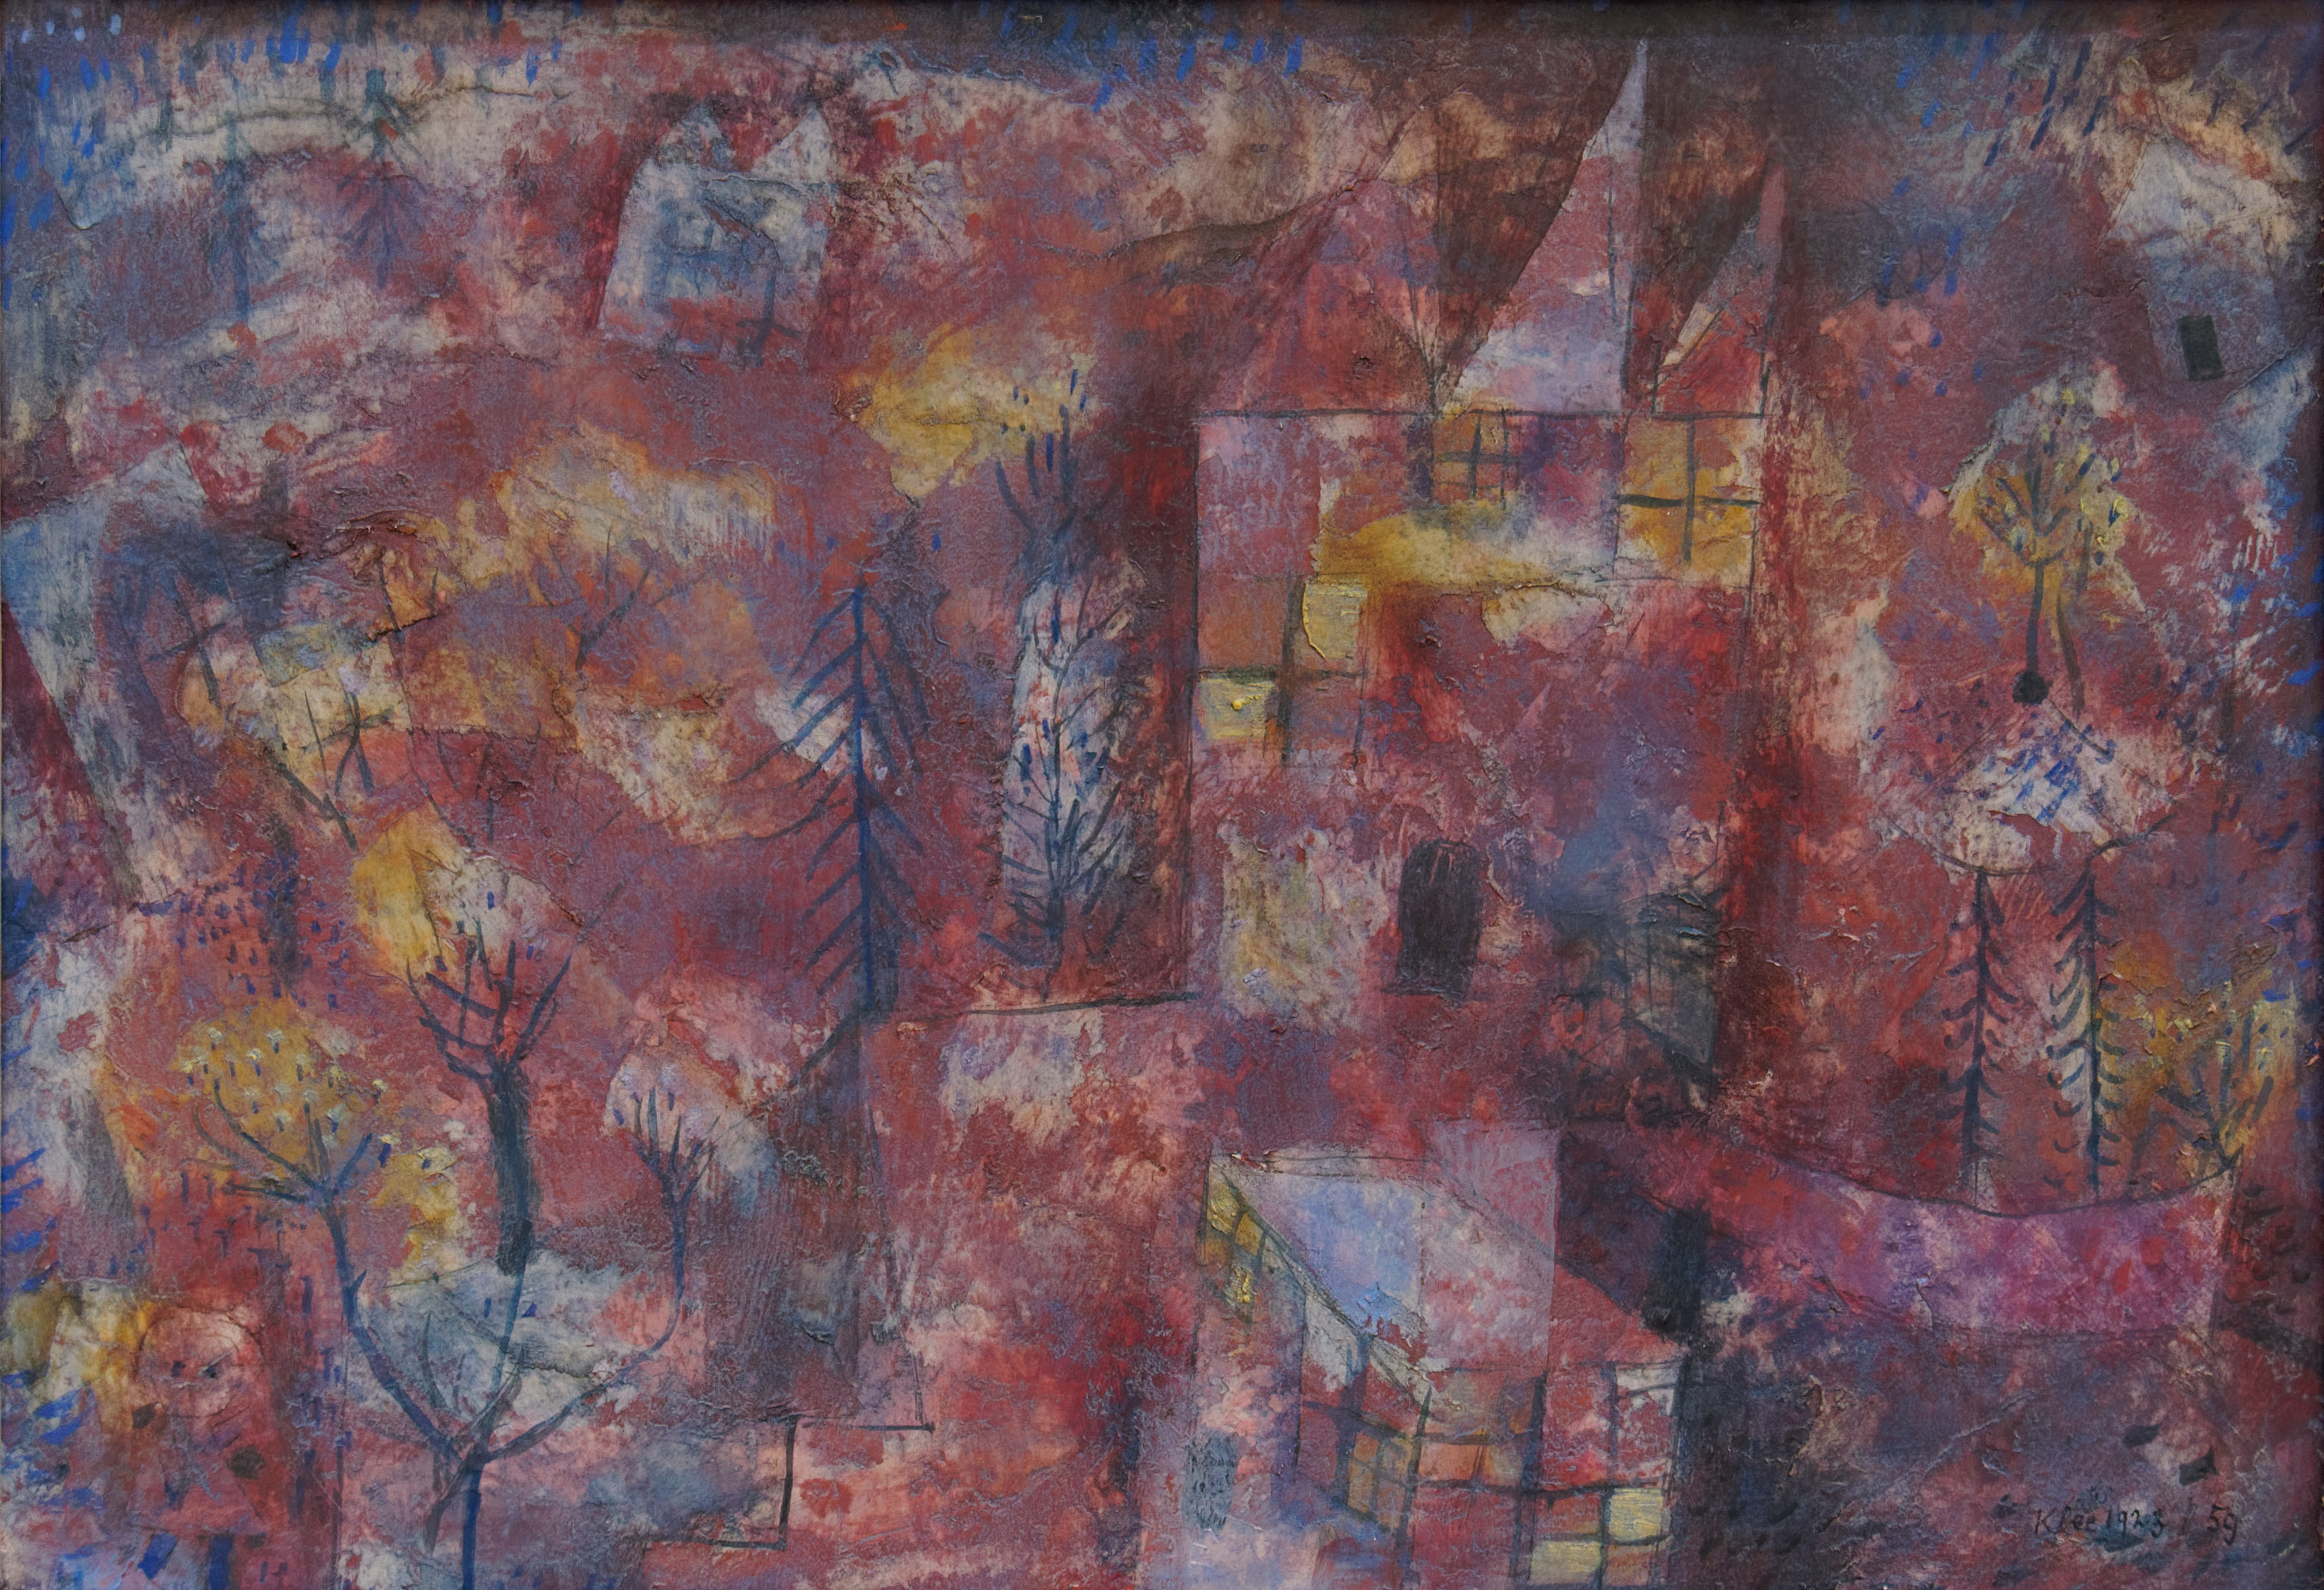 File:Paul Klee - paysage à l'enfant.jpg - Wikimedia Commons